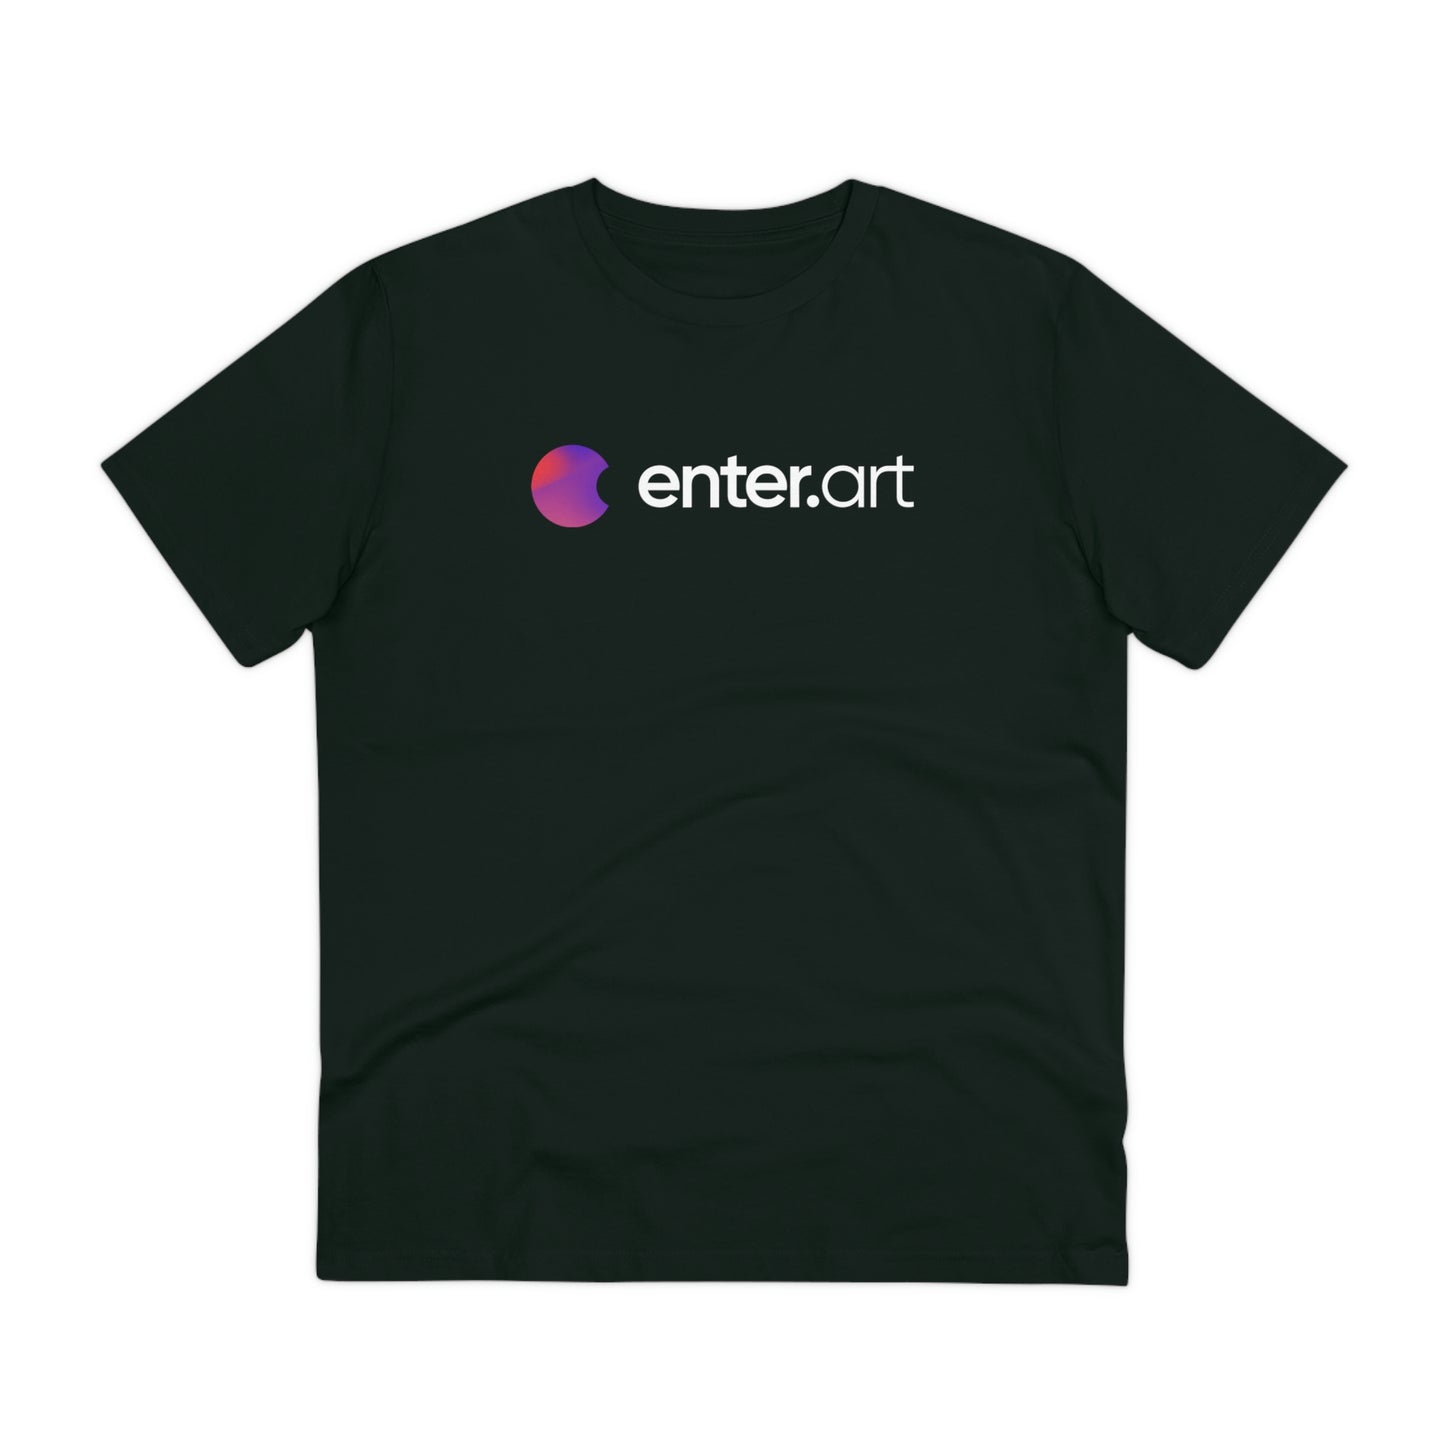 enter.art - Black t-shirt